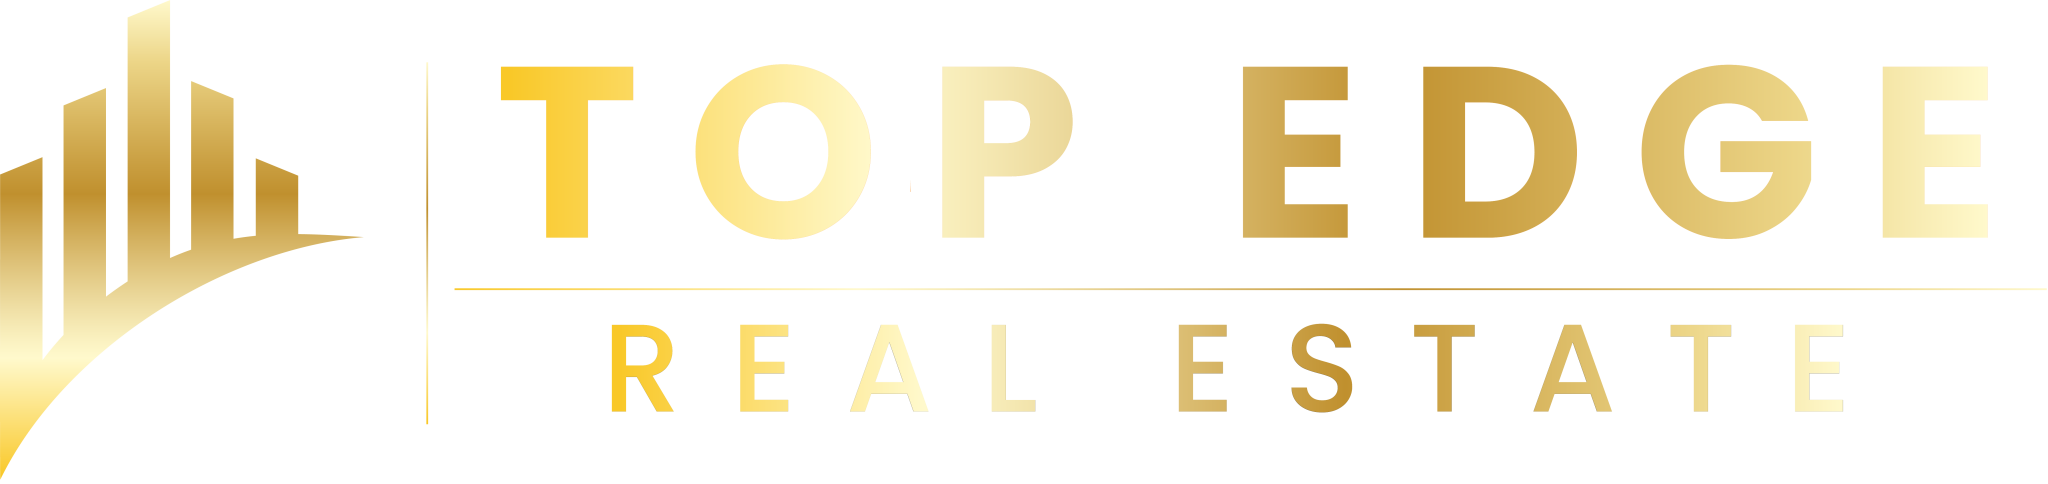 Top Edge Real Estate - TRUGANINA - Real Estate Agency